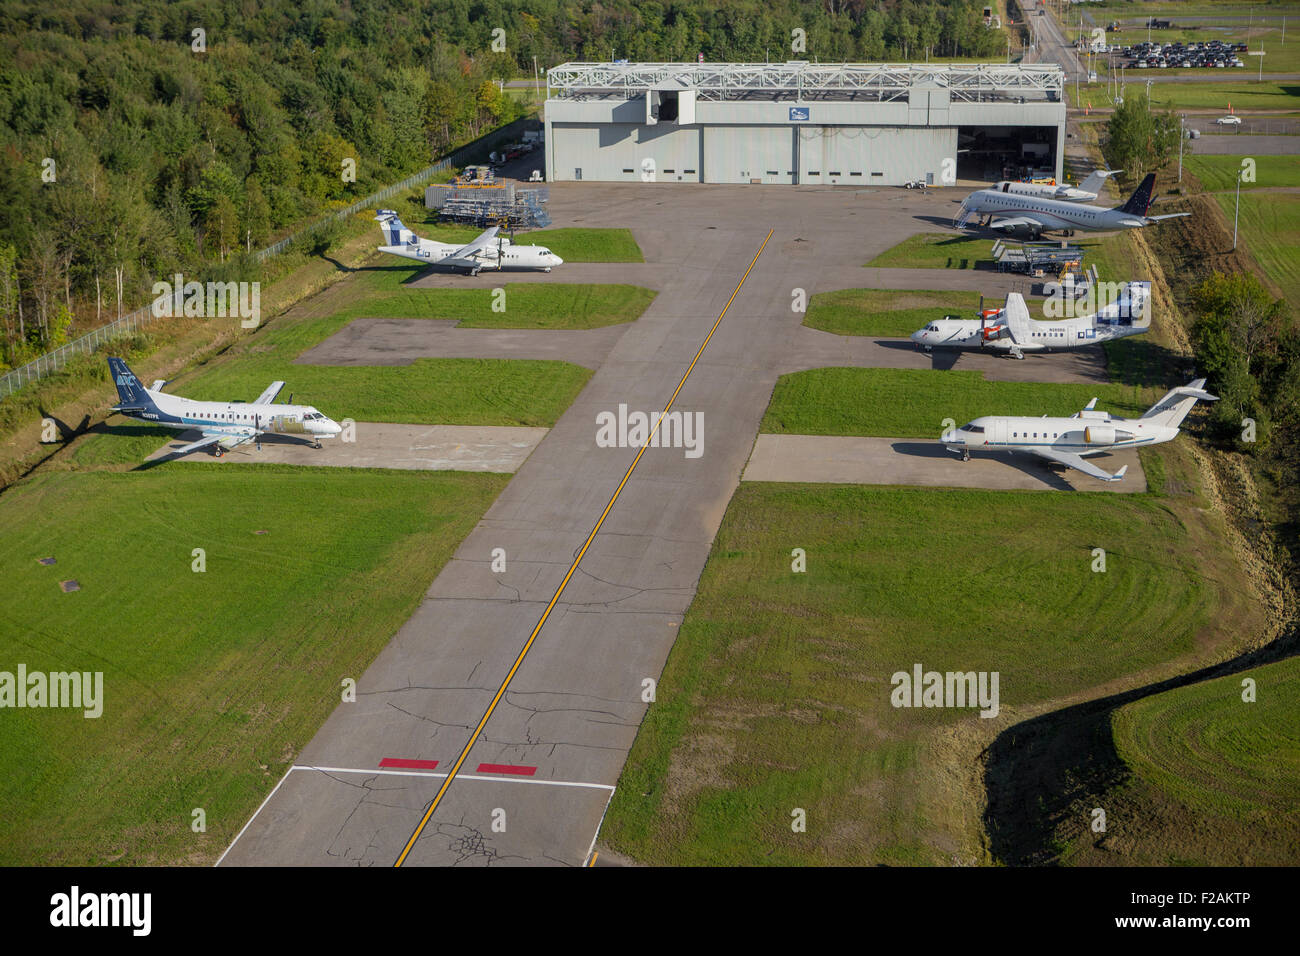 Discovery Air Technical Services ist in diesem Luftbild in Quebec City Discovery Air Technical Services abgebildet. Stockfoto